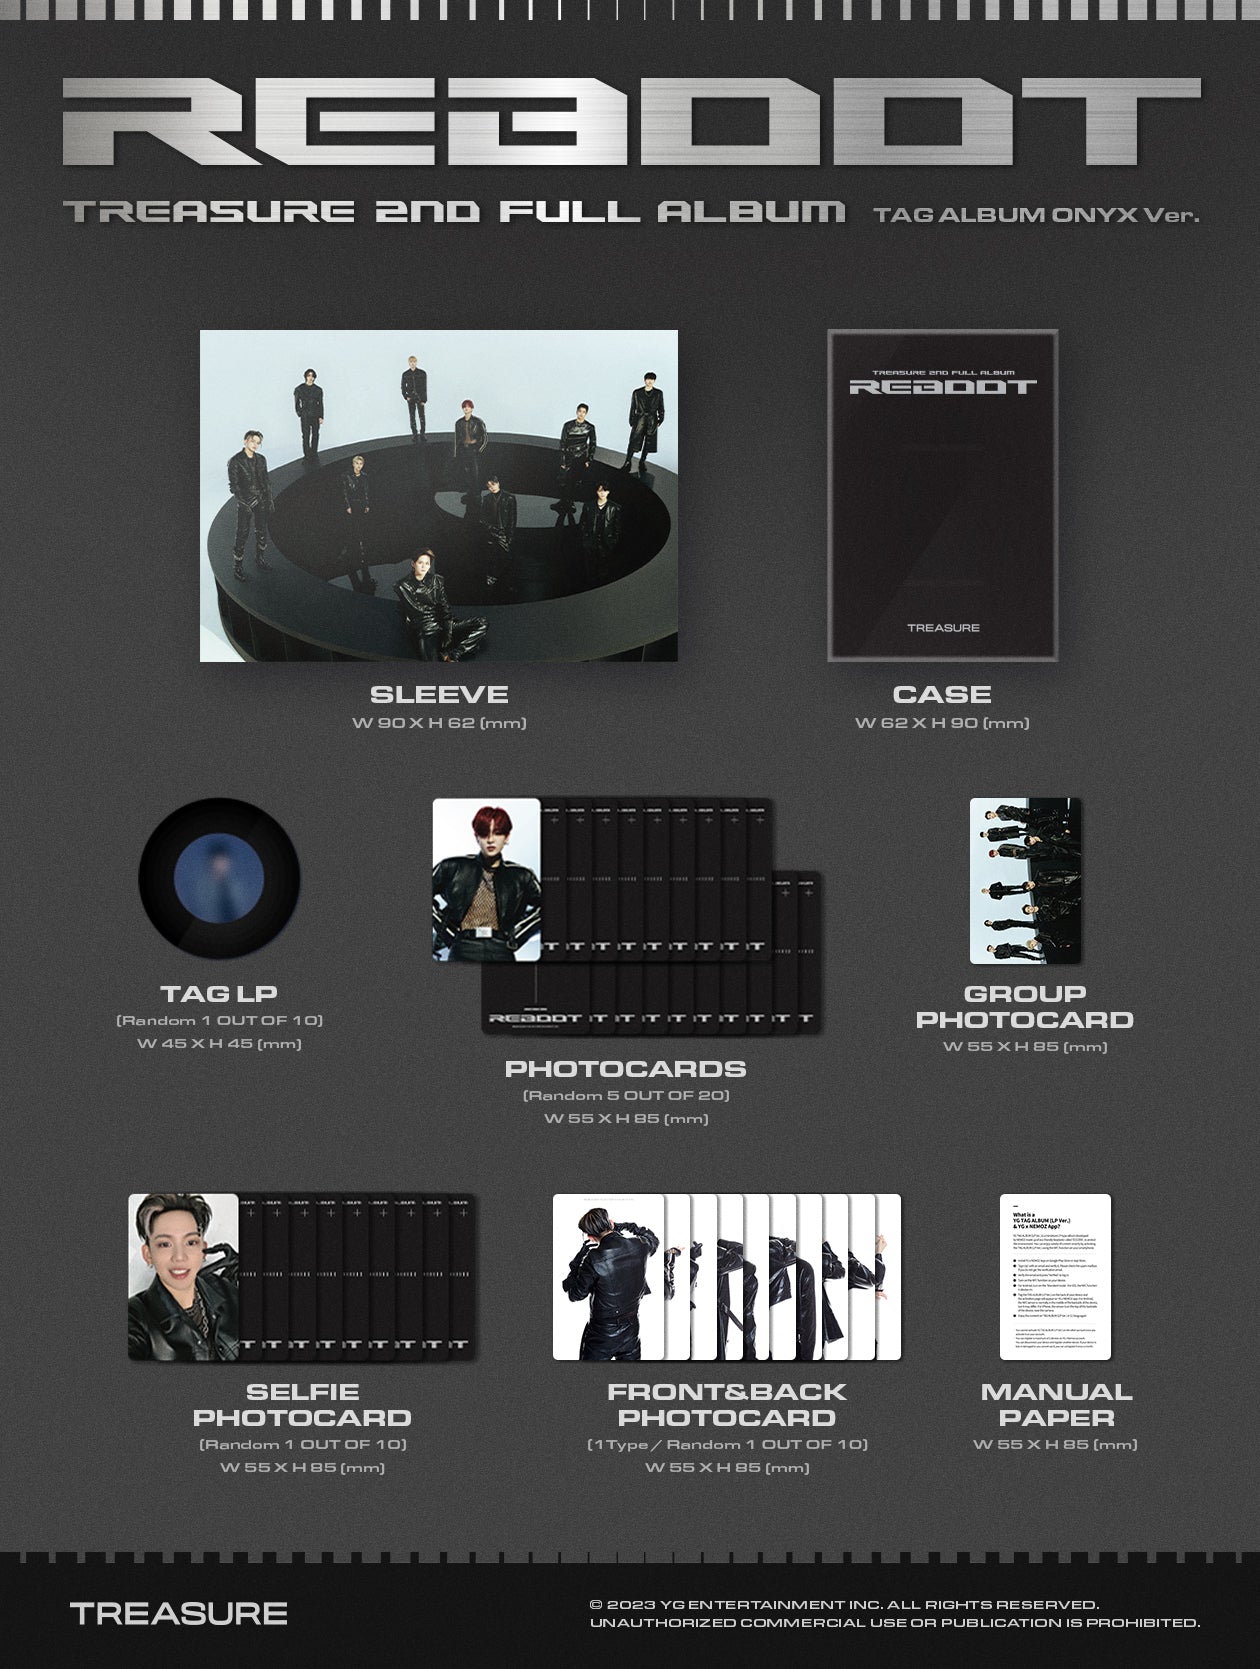 TREASURE - 2nd Full Album 'REBOOT’ (YG TAG Album) + Apple Music POB Photocard